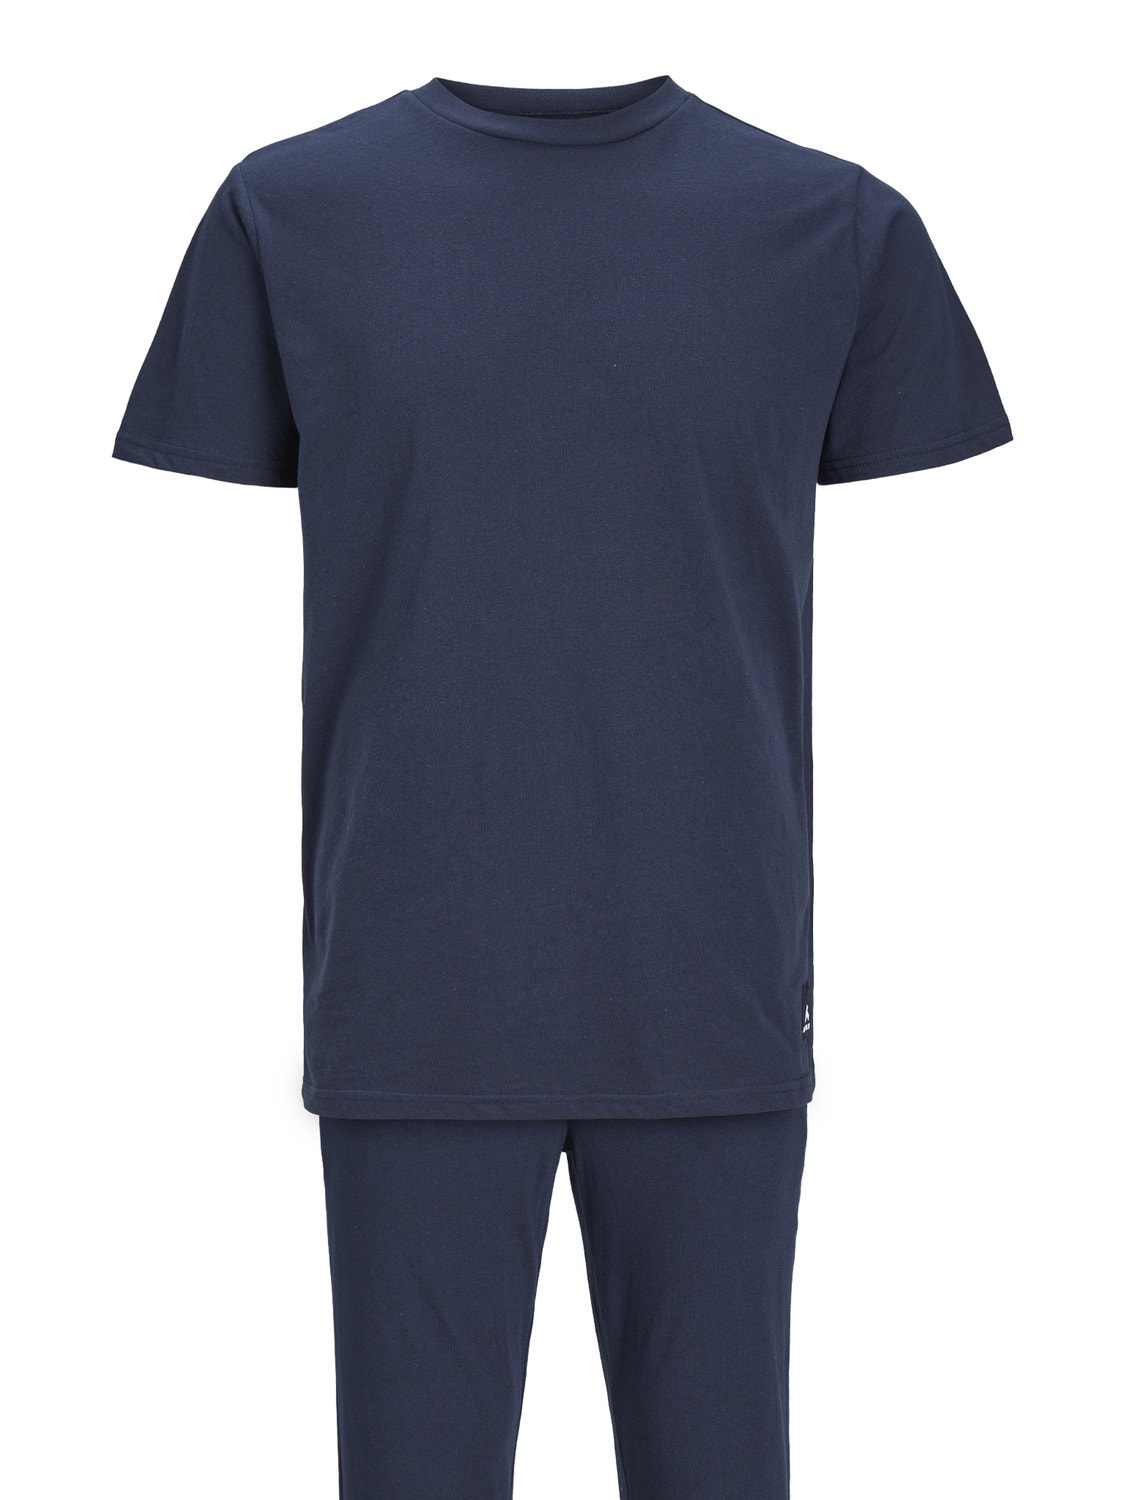 Jack & Jones Plain Crew neck Loungewear set -Navy Blazer - 12245898